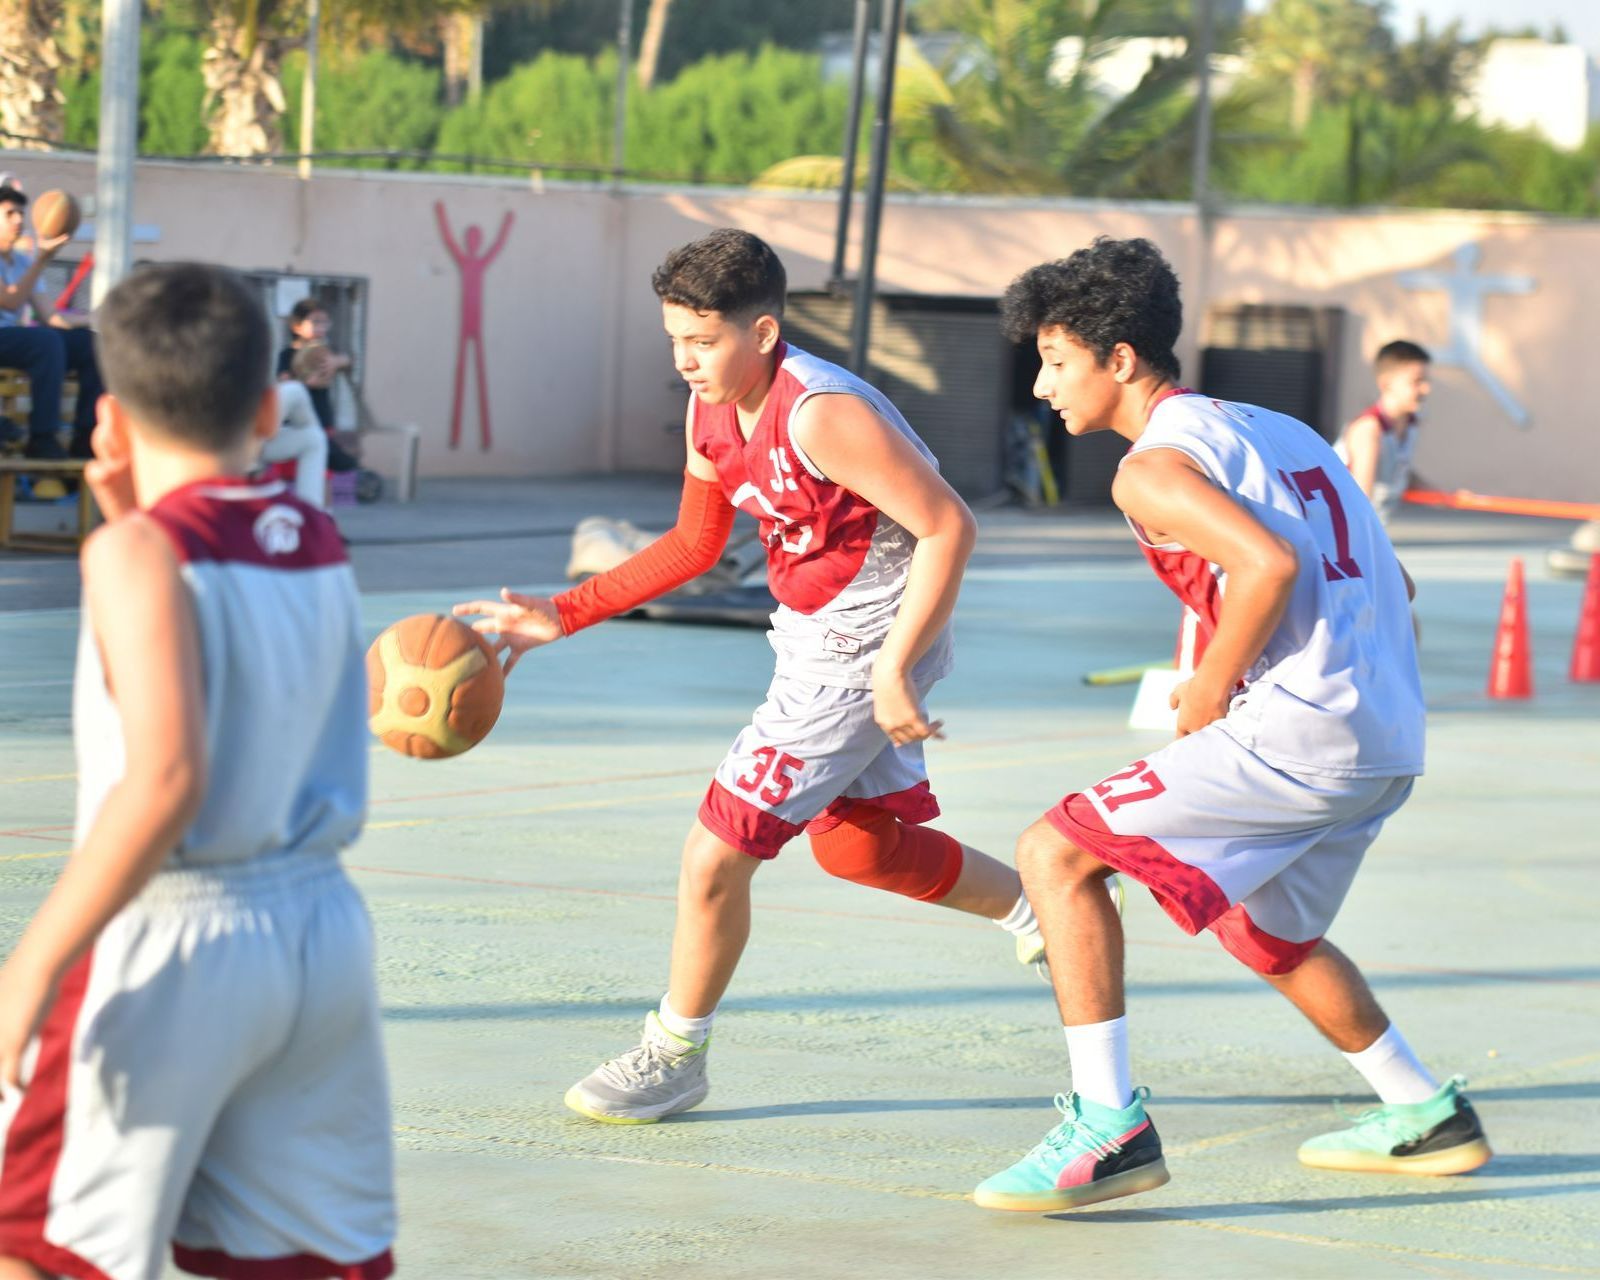 JU boys playing basketball